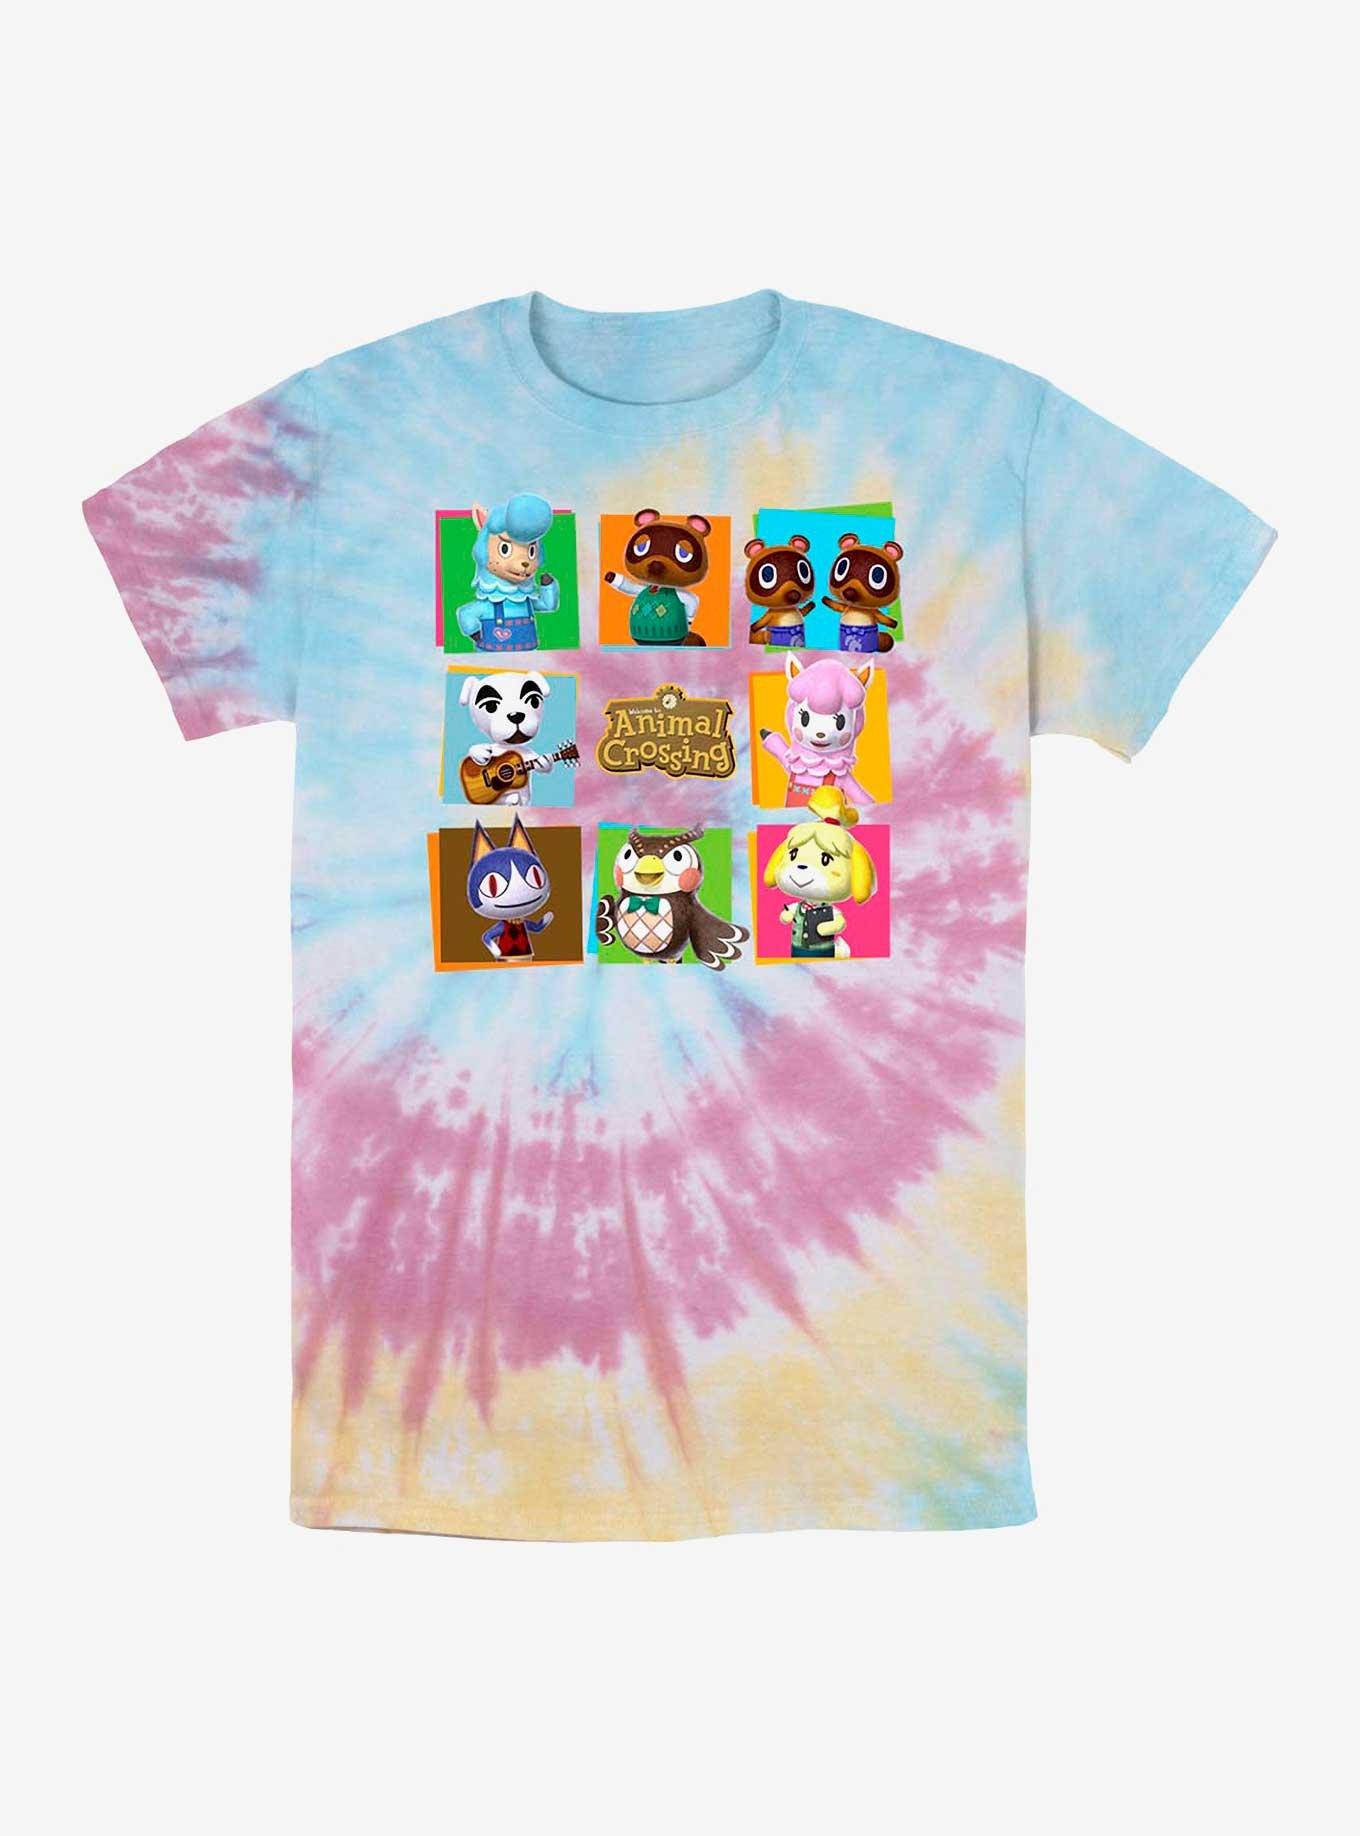 Nintendo Animal Crossing Villagers Tie Dye T-Shirt